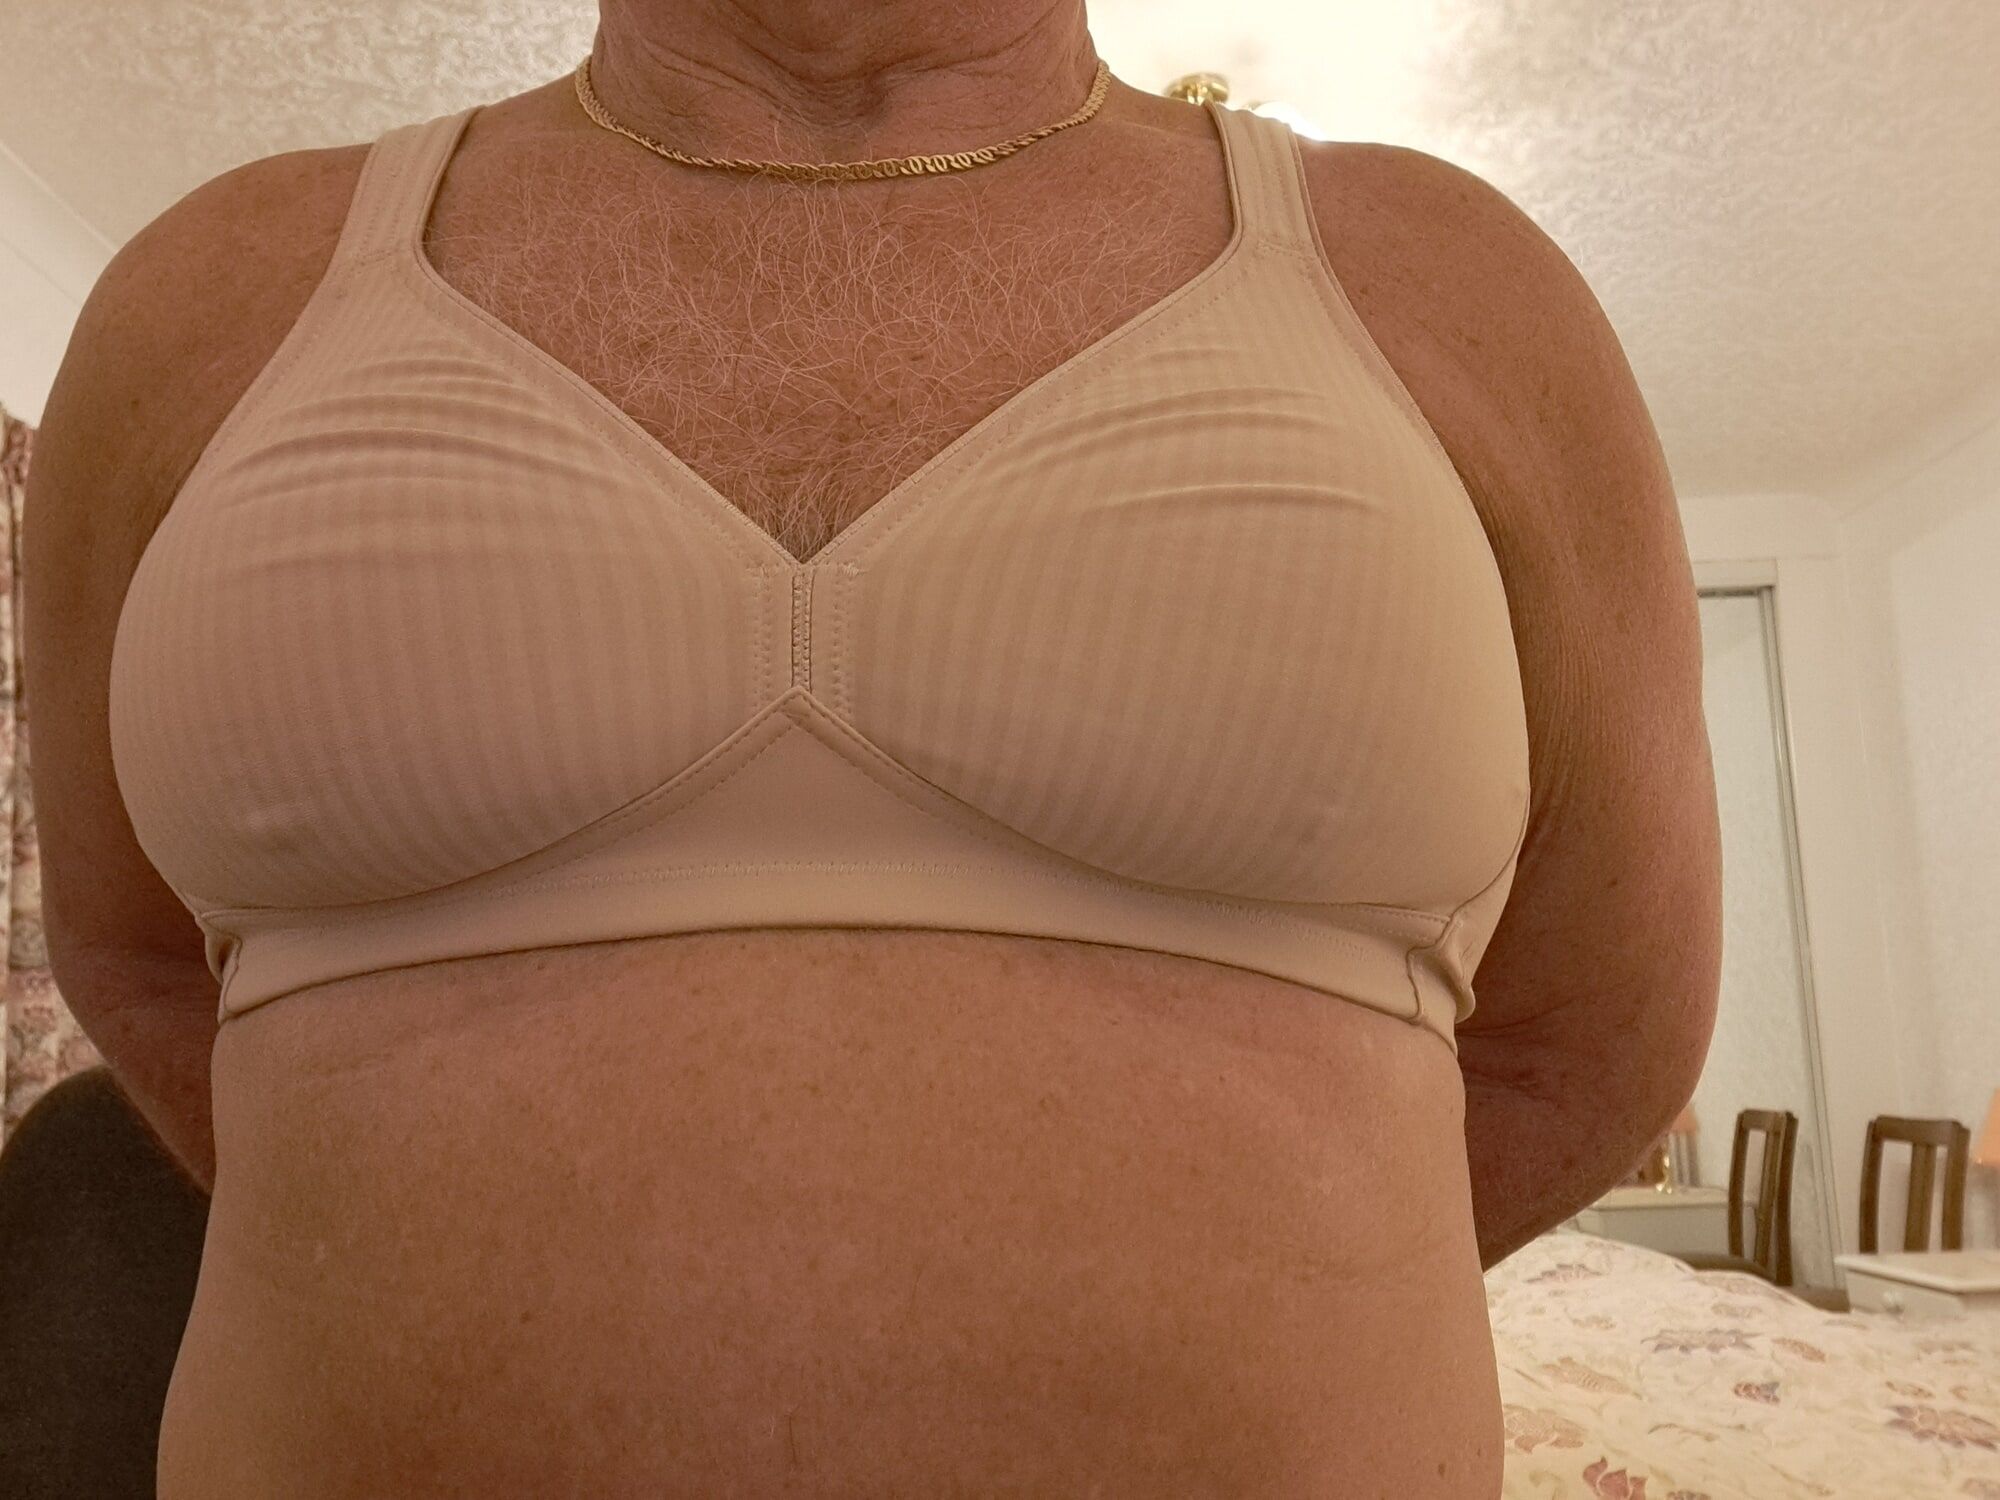 My new bra 